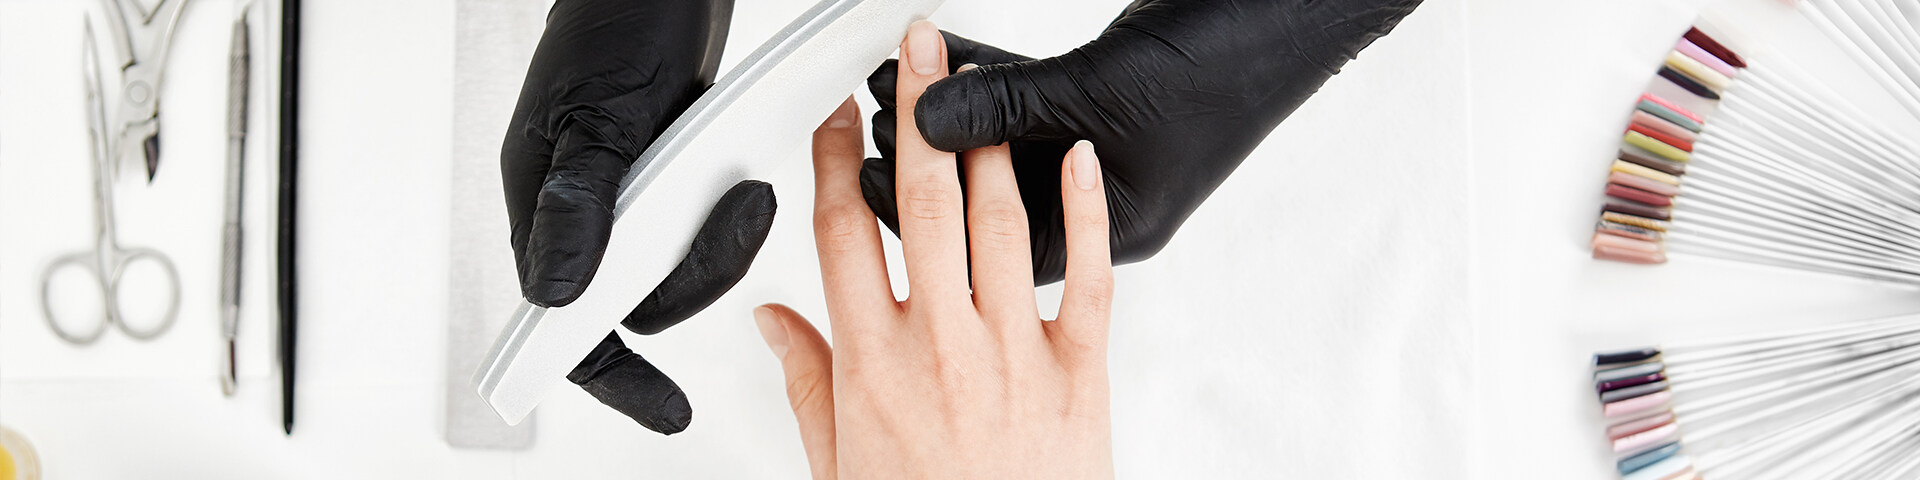 Are Nano Nail Files Bad for Your Nails?